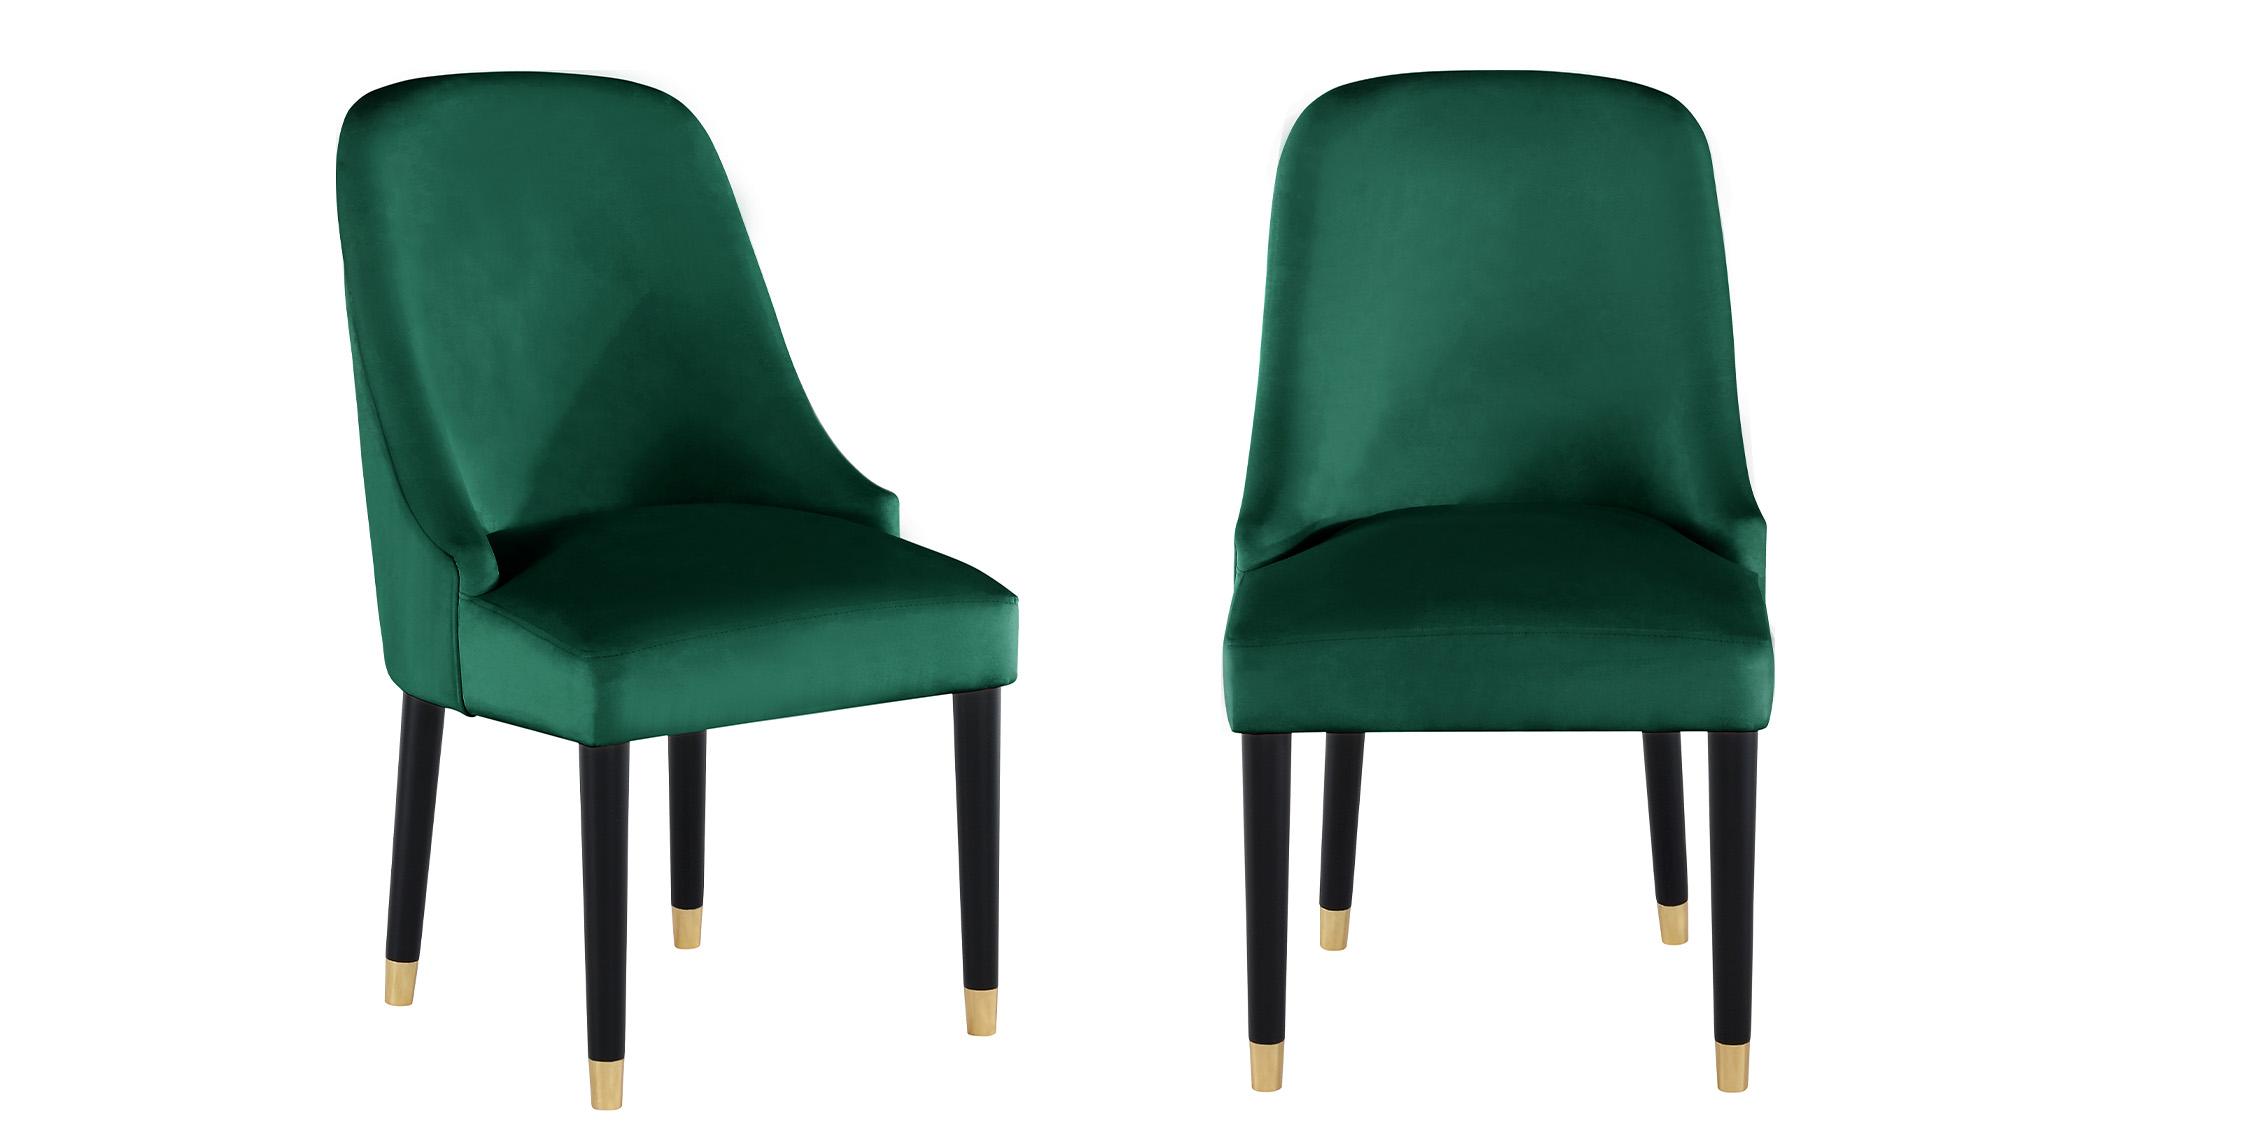 Contemporary, Modern Dining Chair Set OMNI 923Green-C 923Green-C in Green Velvet